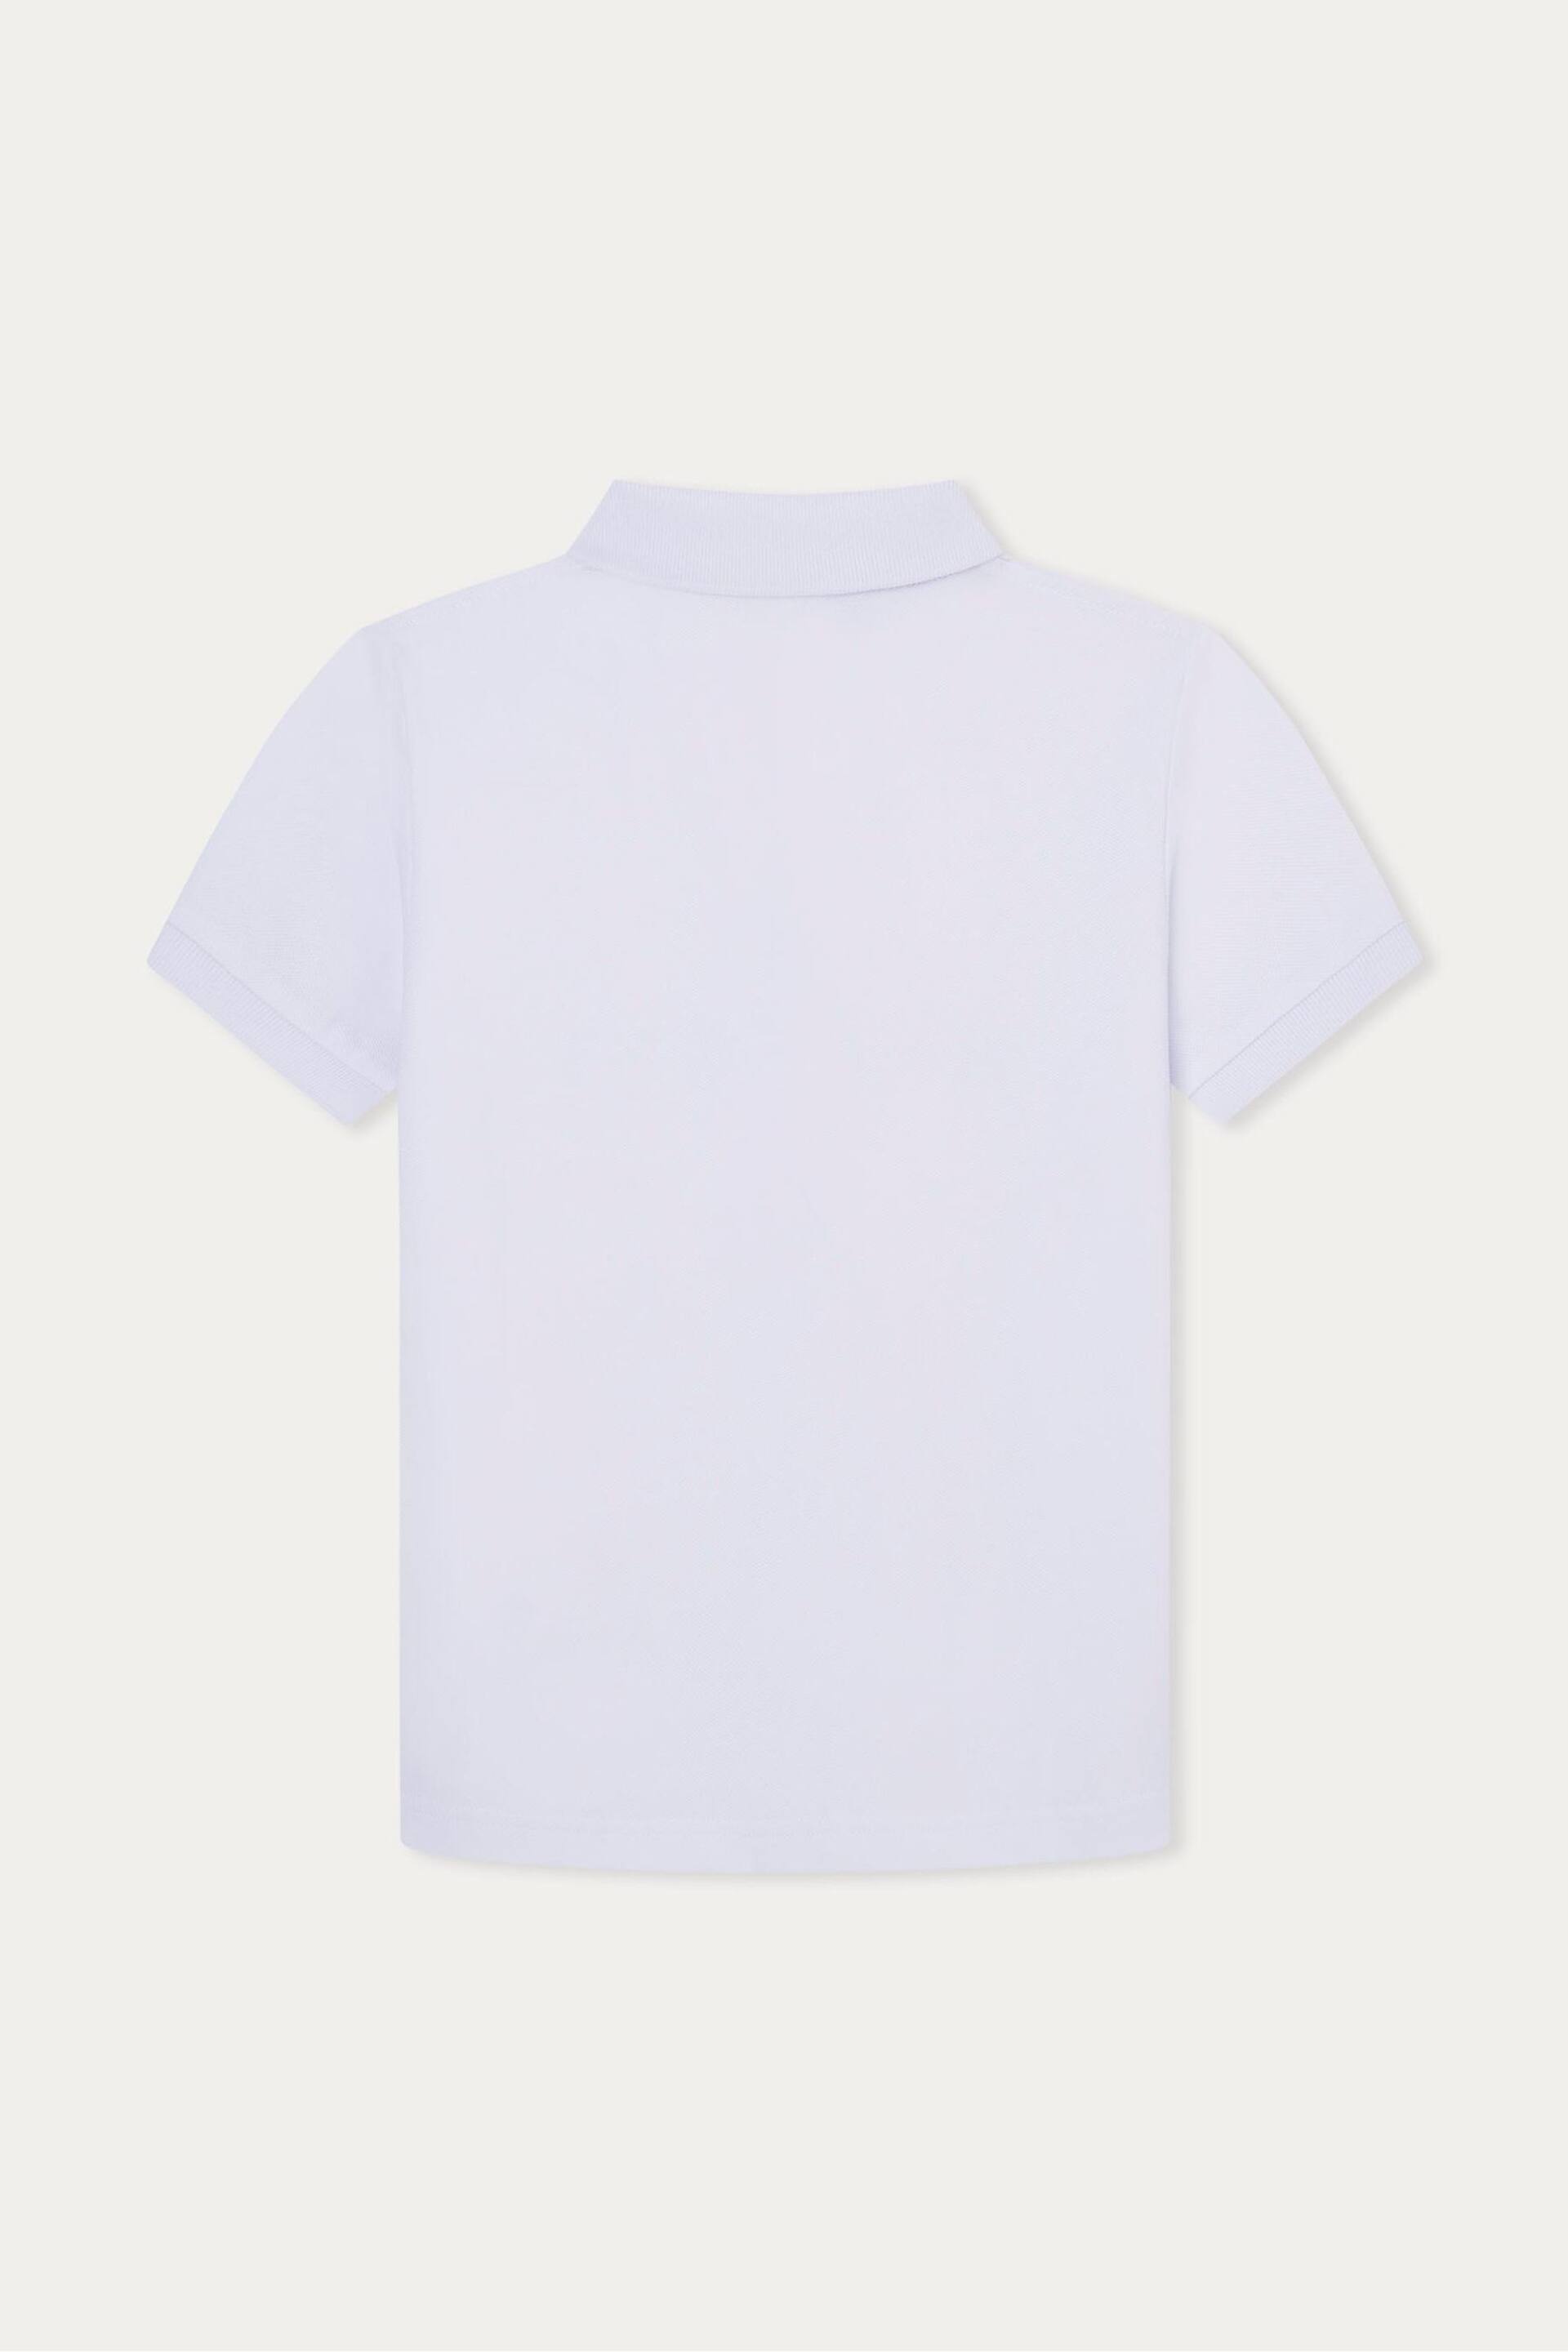 Hackett London Older Boys Short Sleeve White Polo Shirt - Image 2 of 3